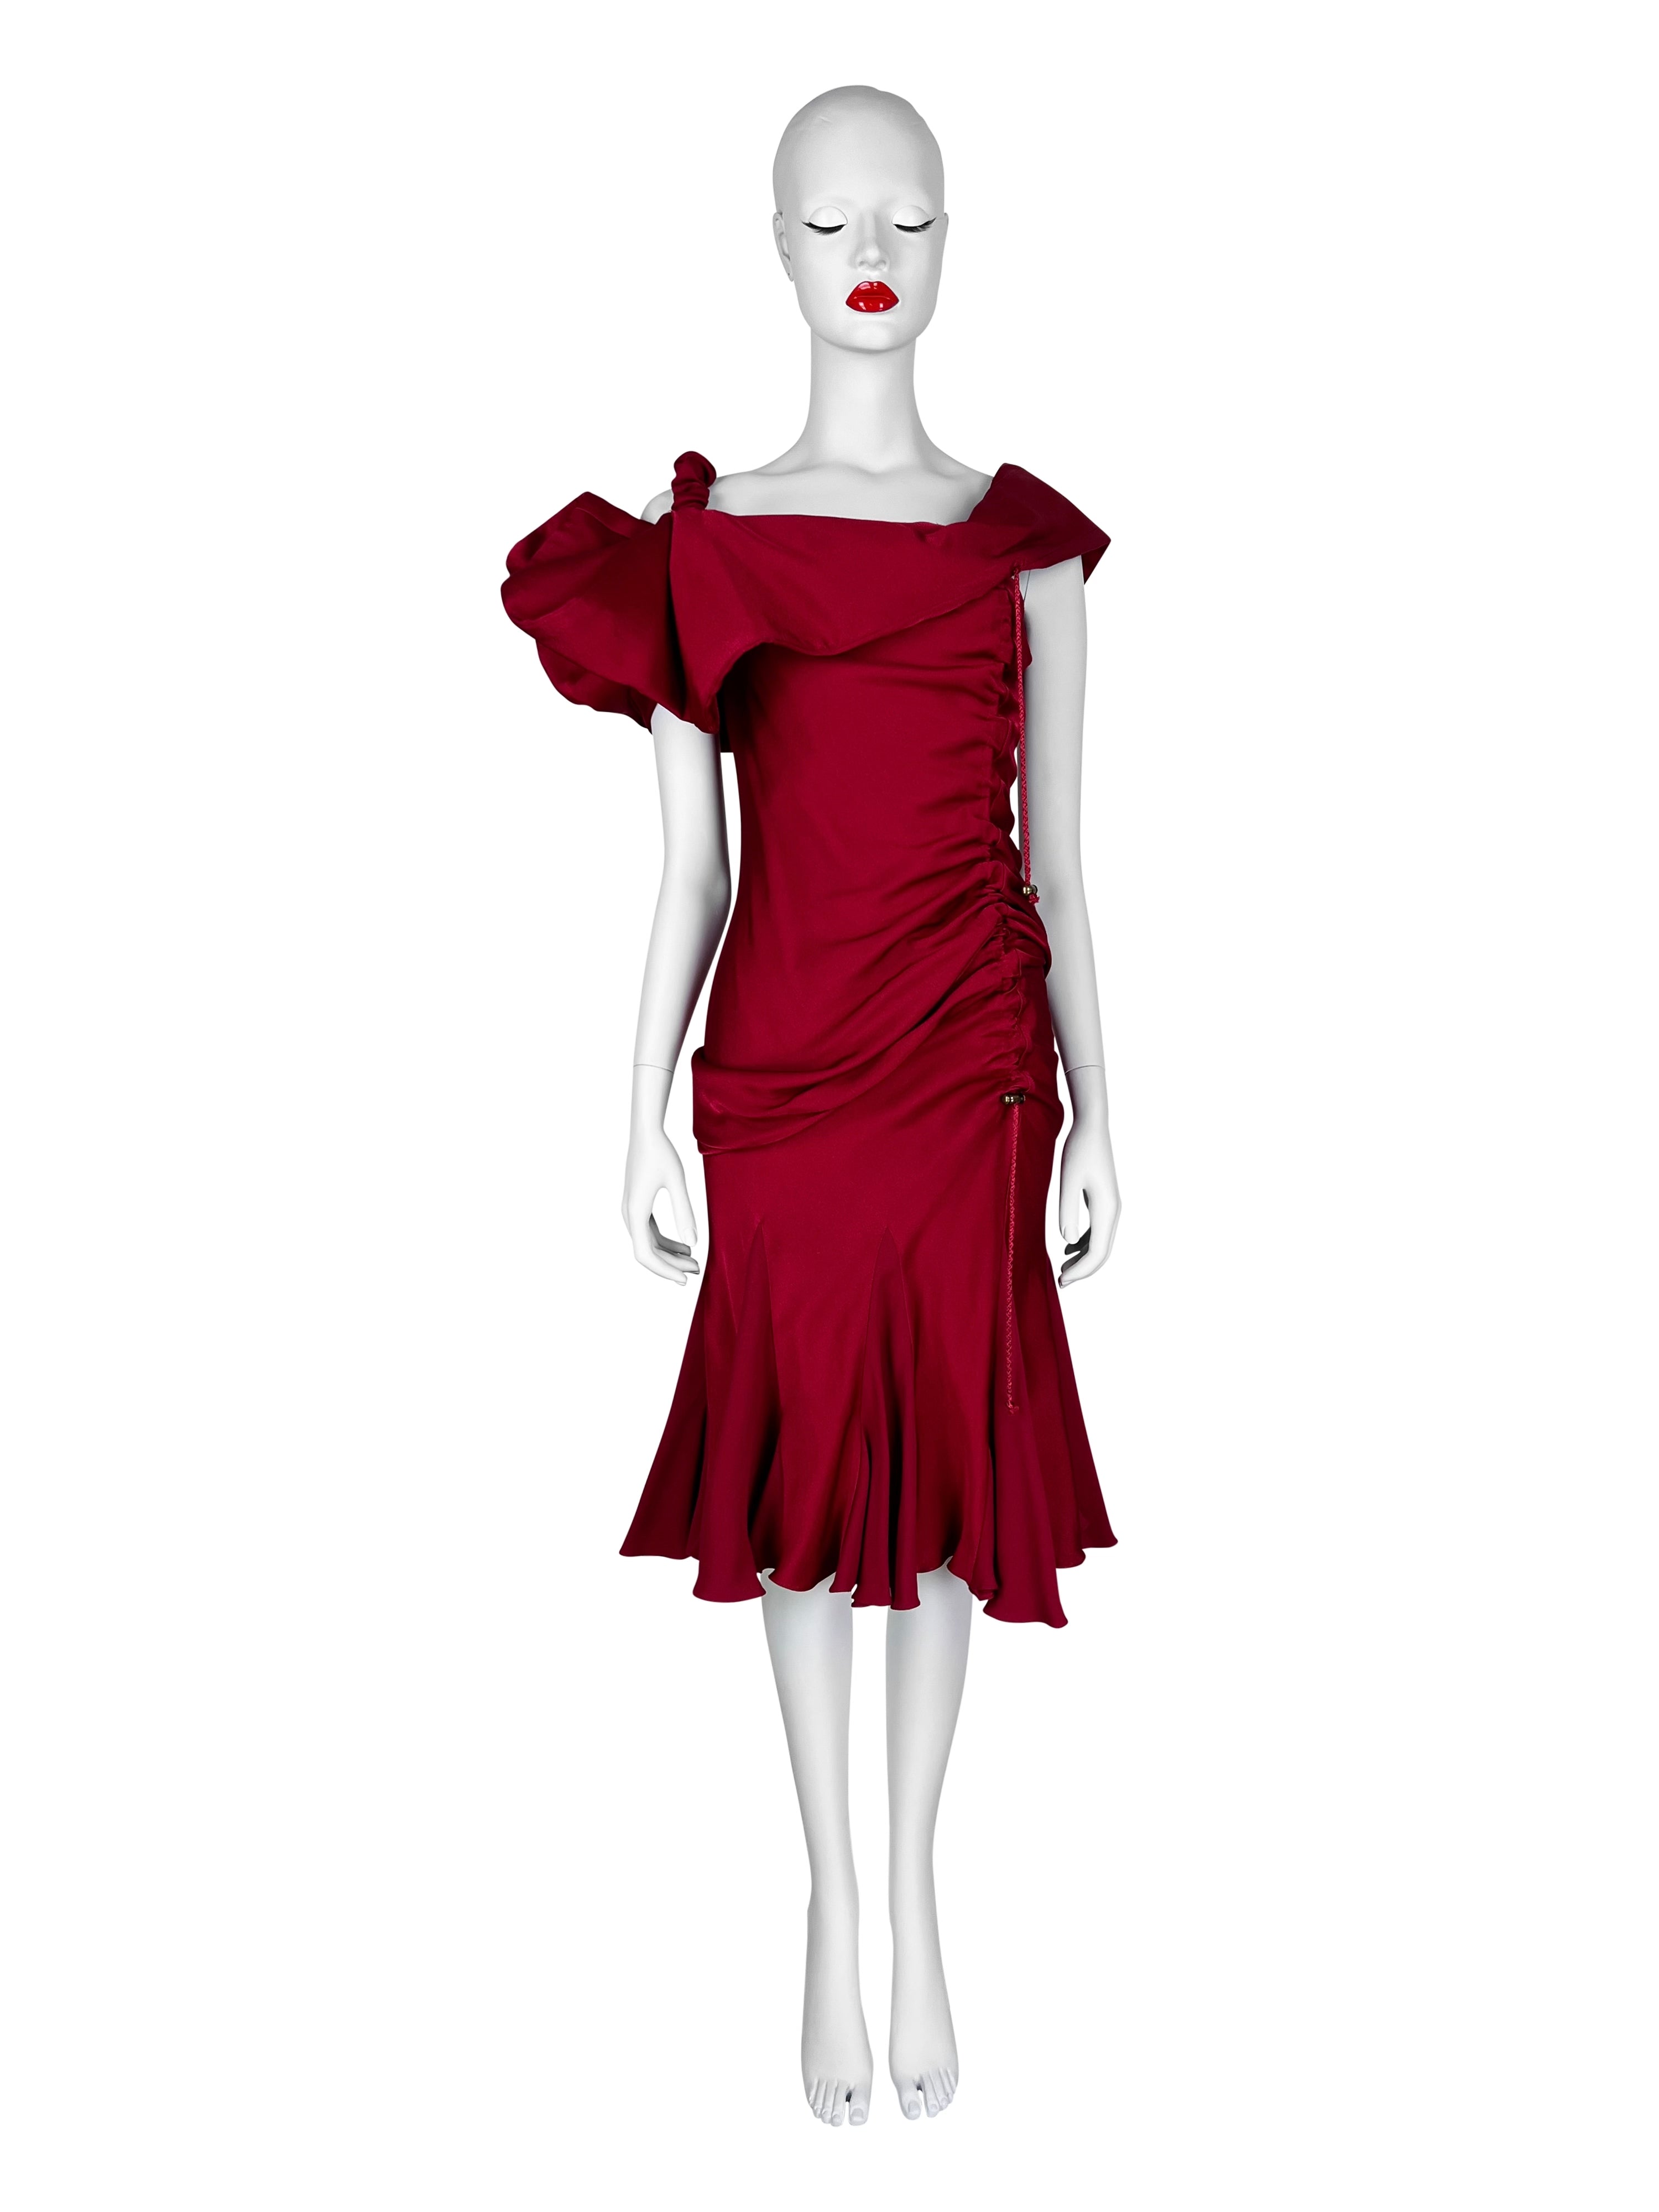 John Galliano Fall 2002 Red Draped Dress